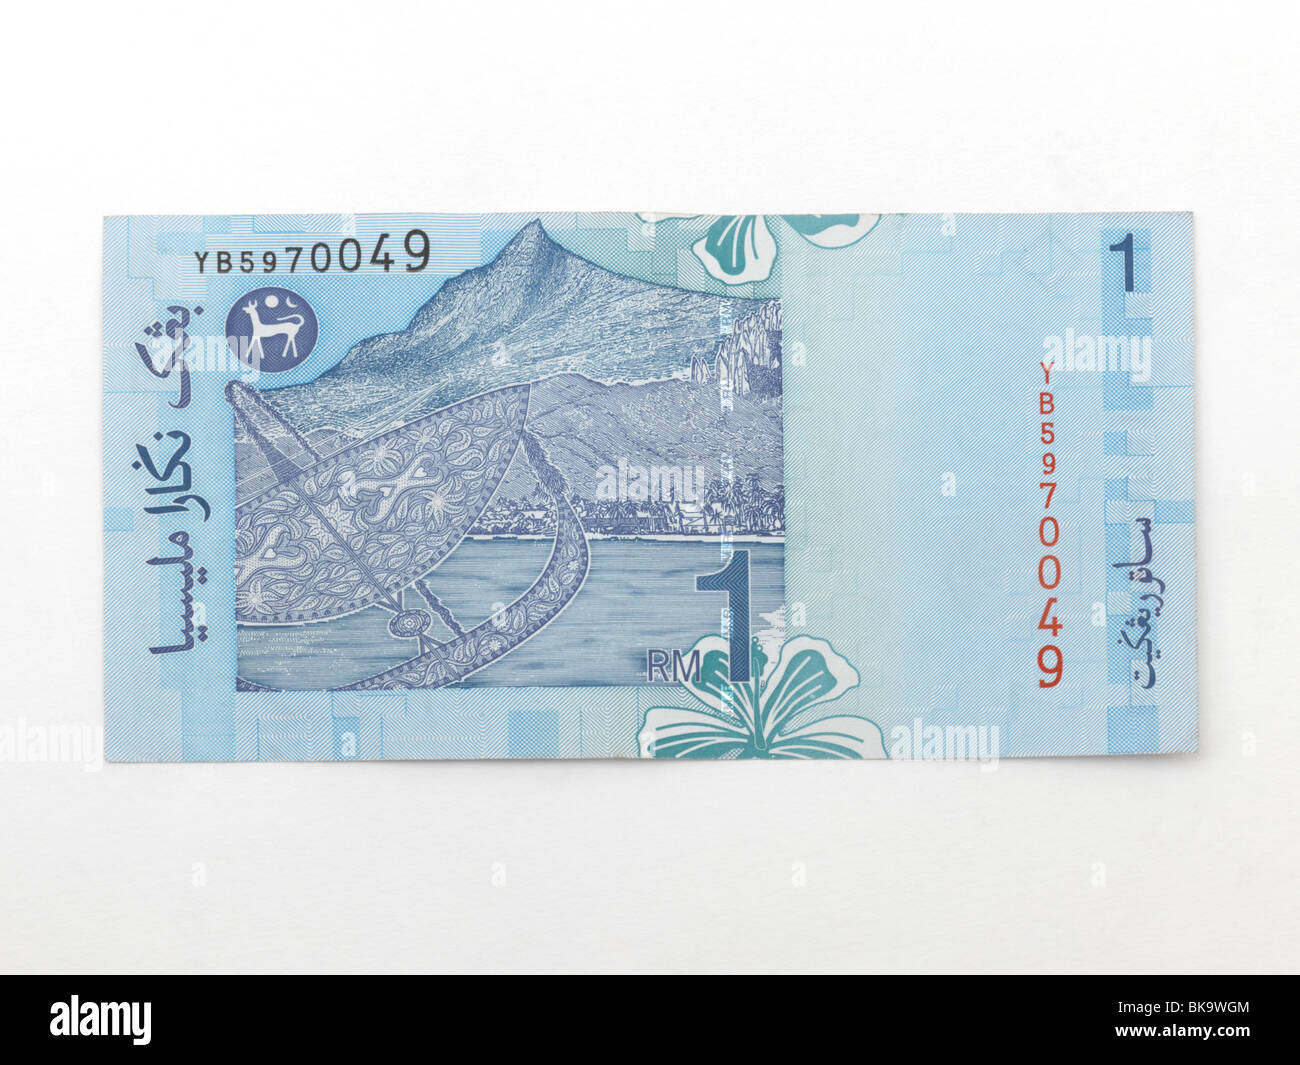 Malaysian Banknote 1 Ringgit Stock Photo